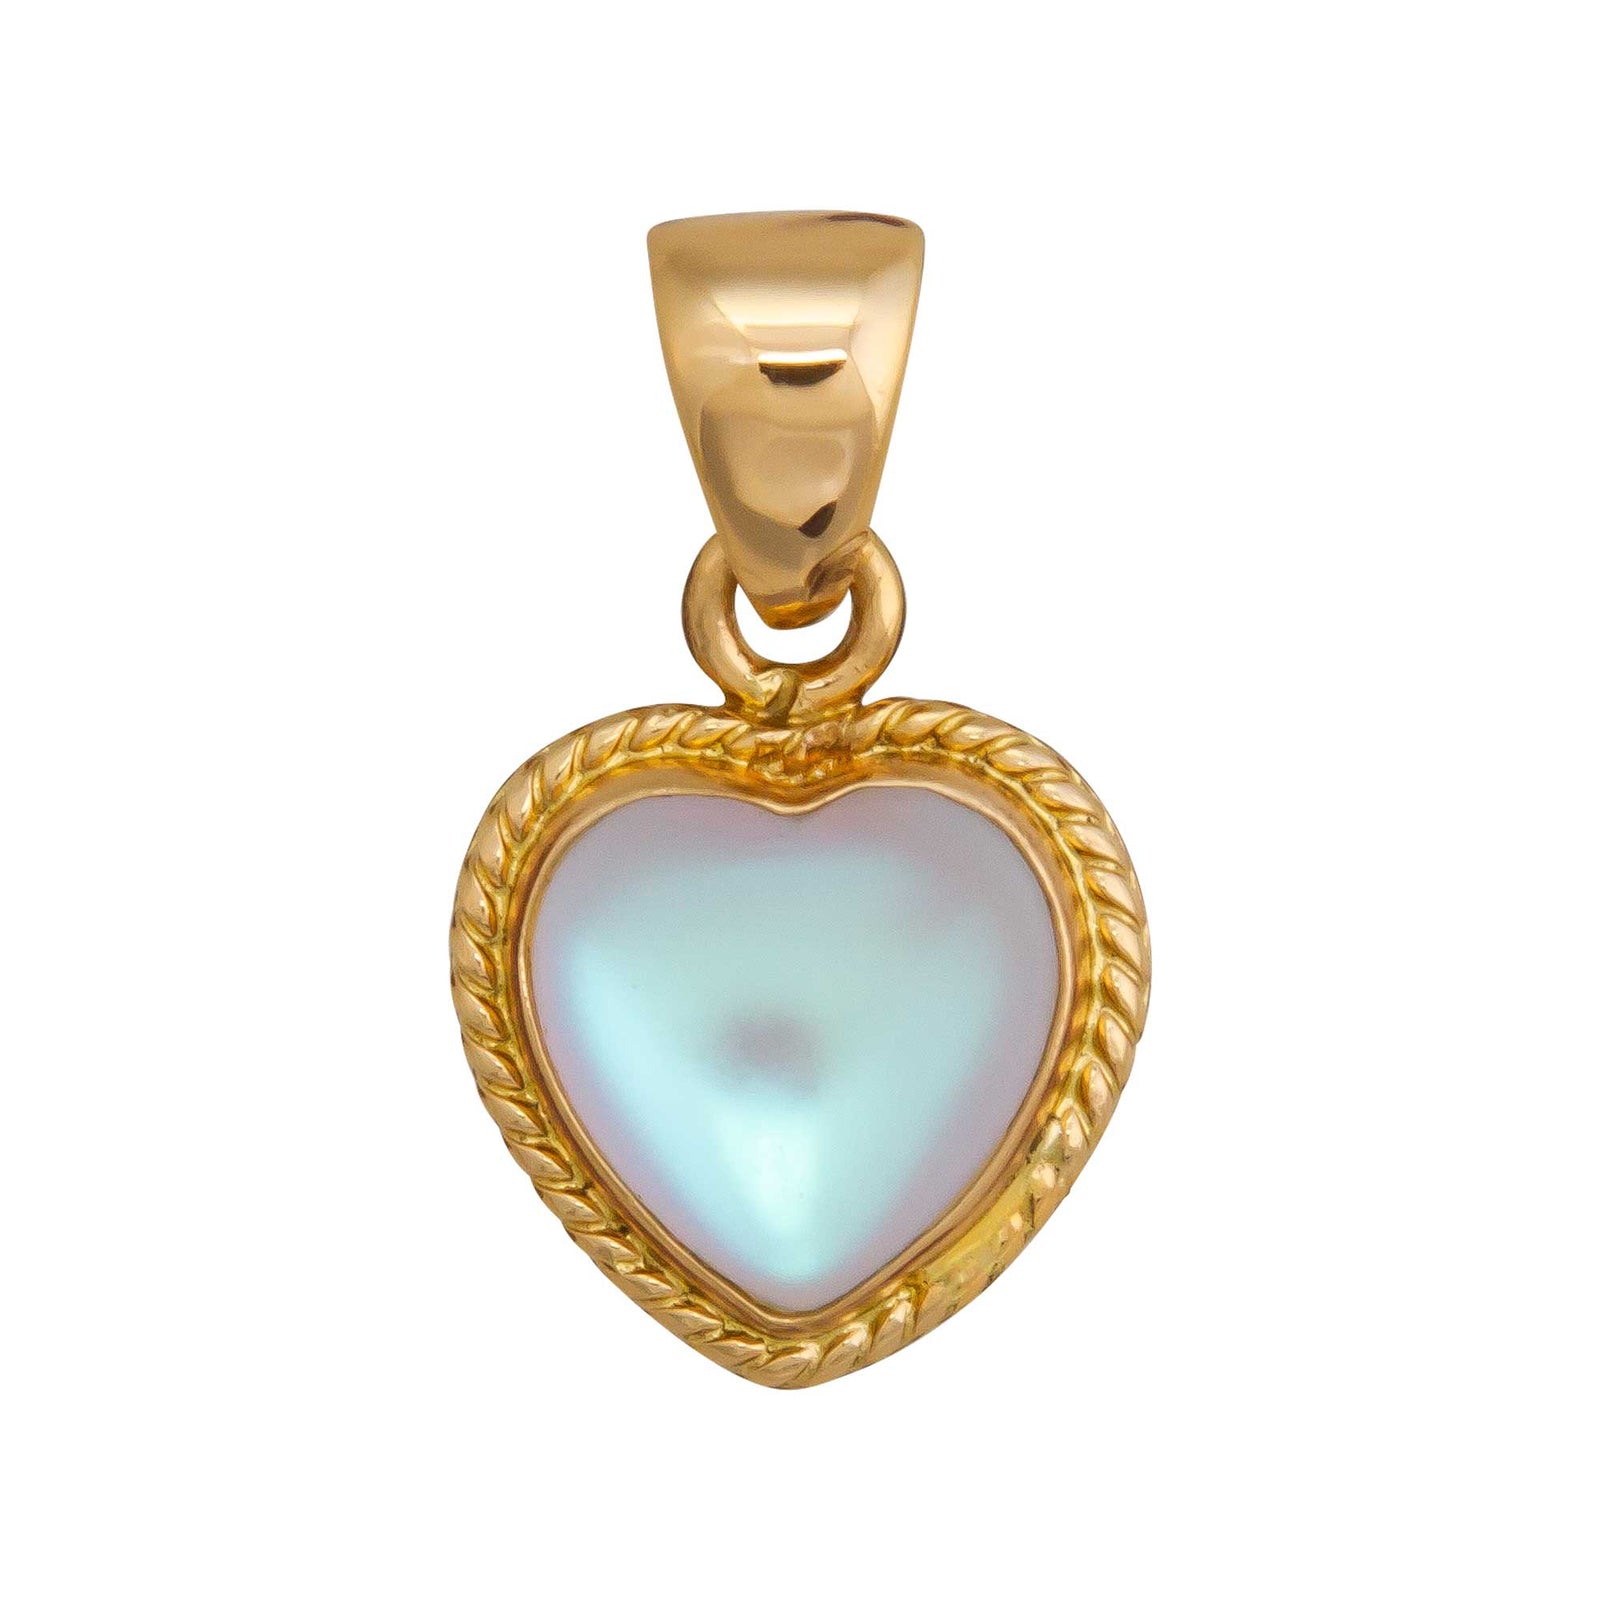 Charles Albert Jewelry - Alchemia Luminite Petite Heart Pendant with Rope Detail - Front View